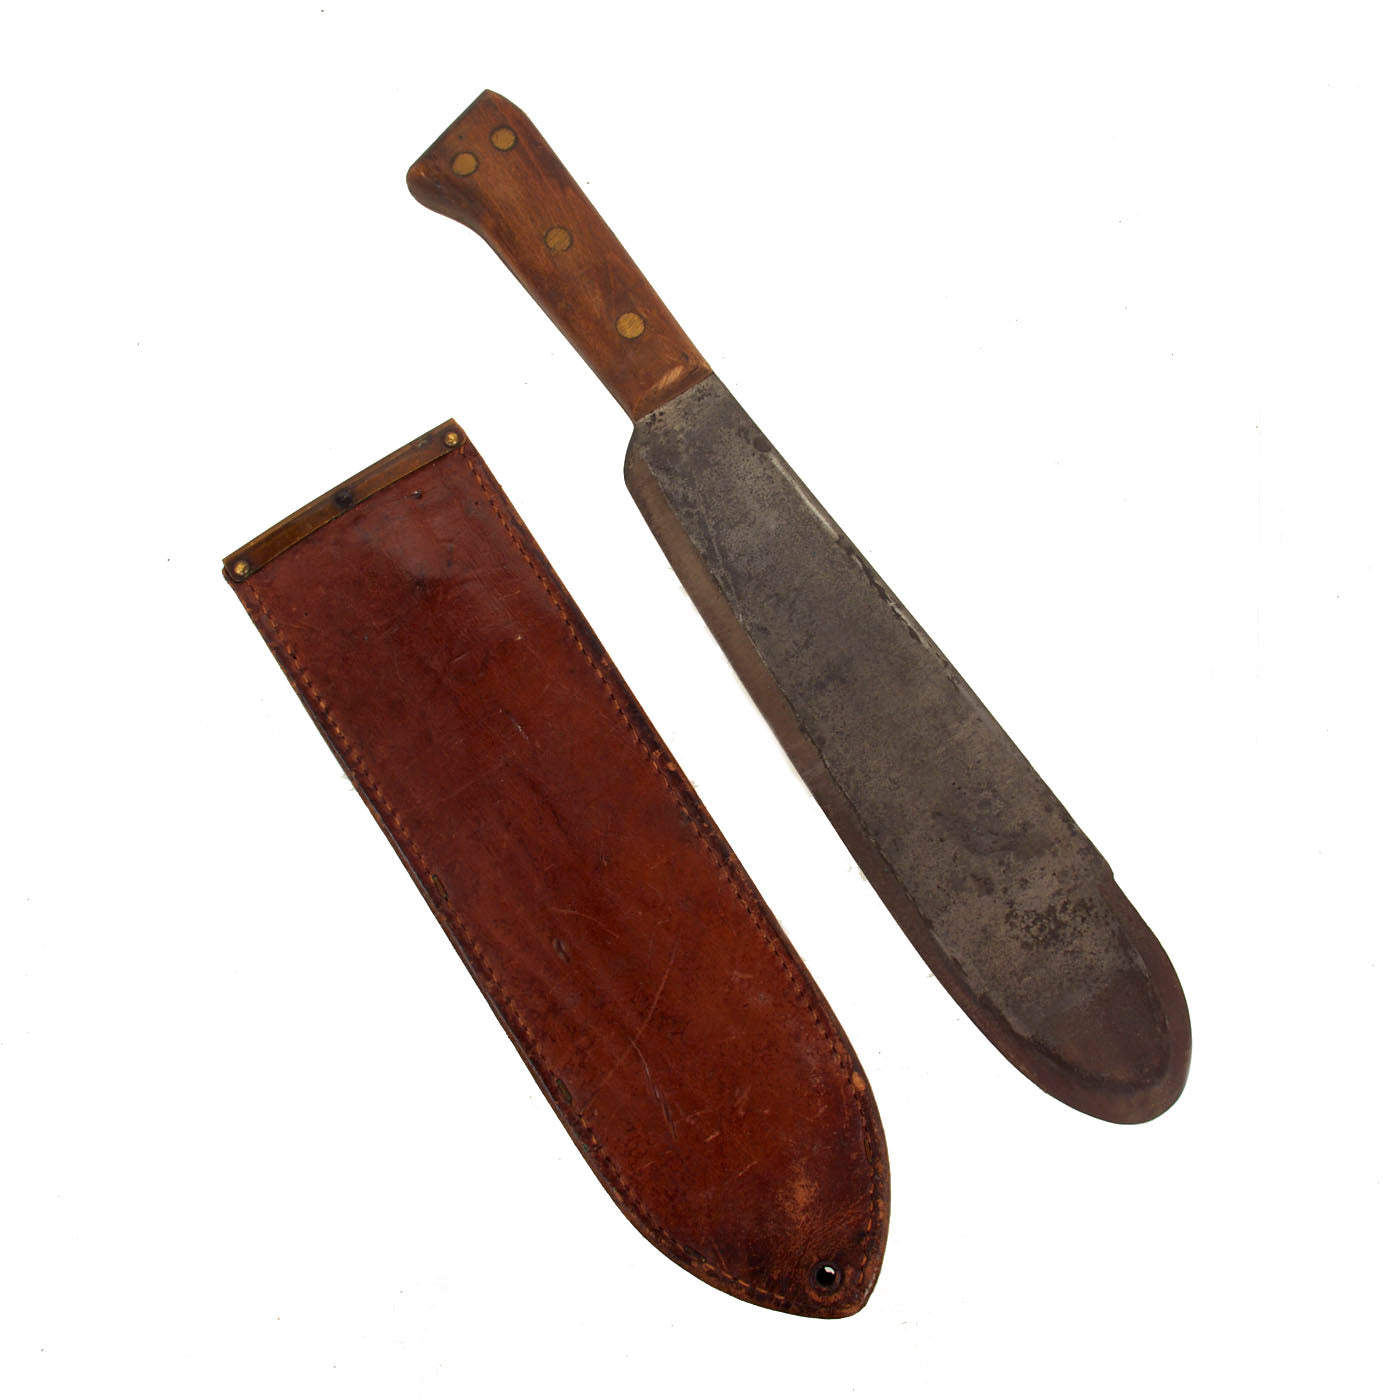 SALE: Two Village Blacksmith Knives 